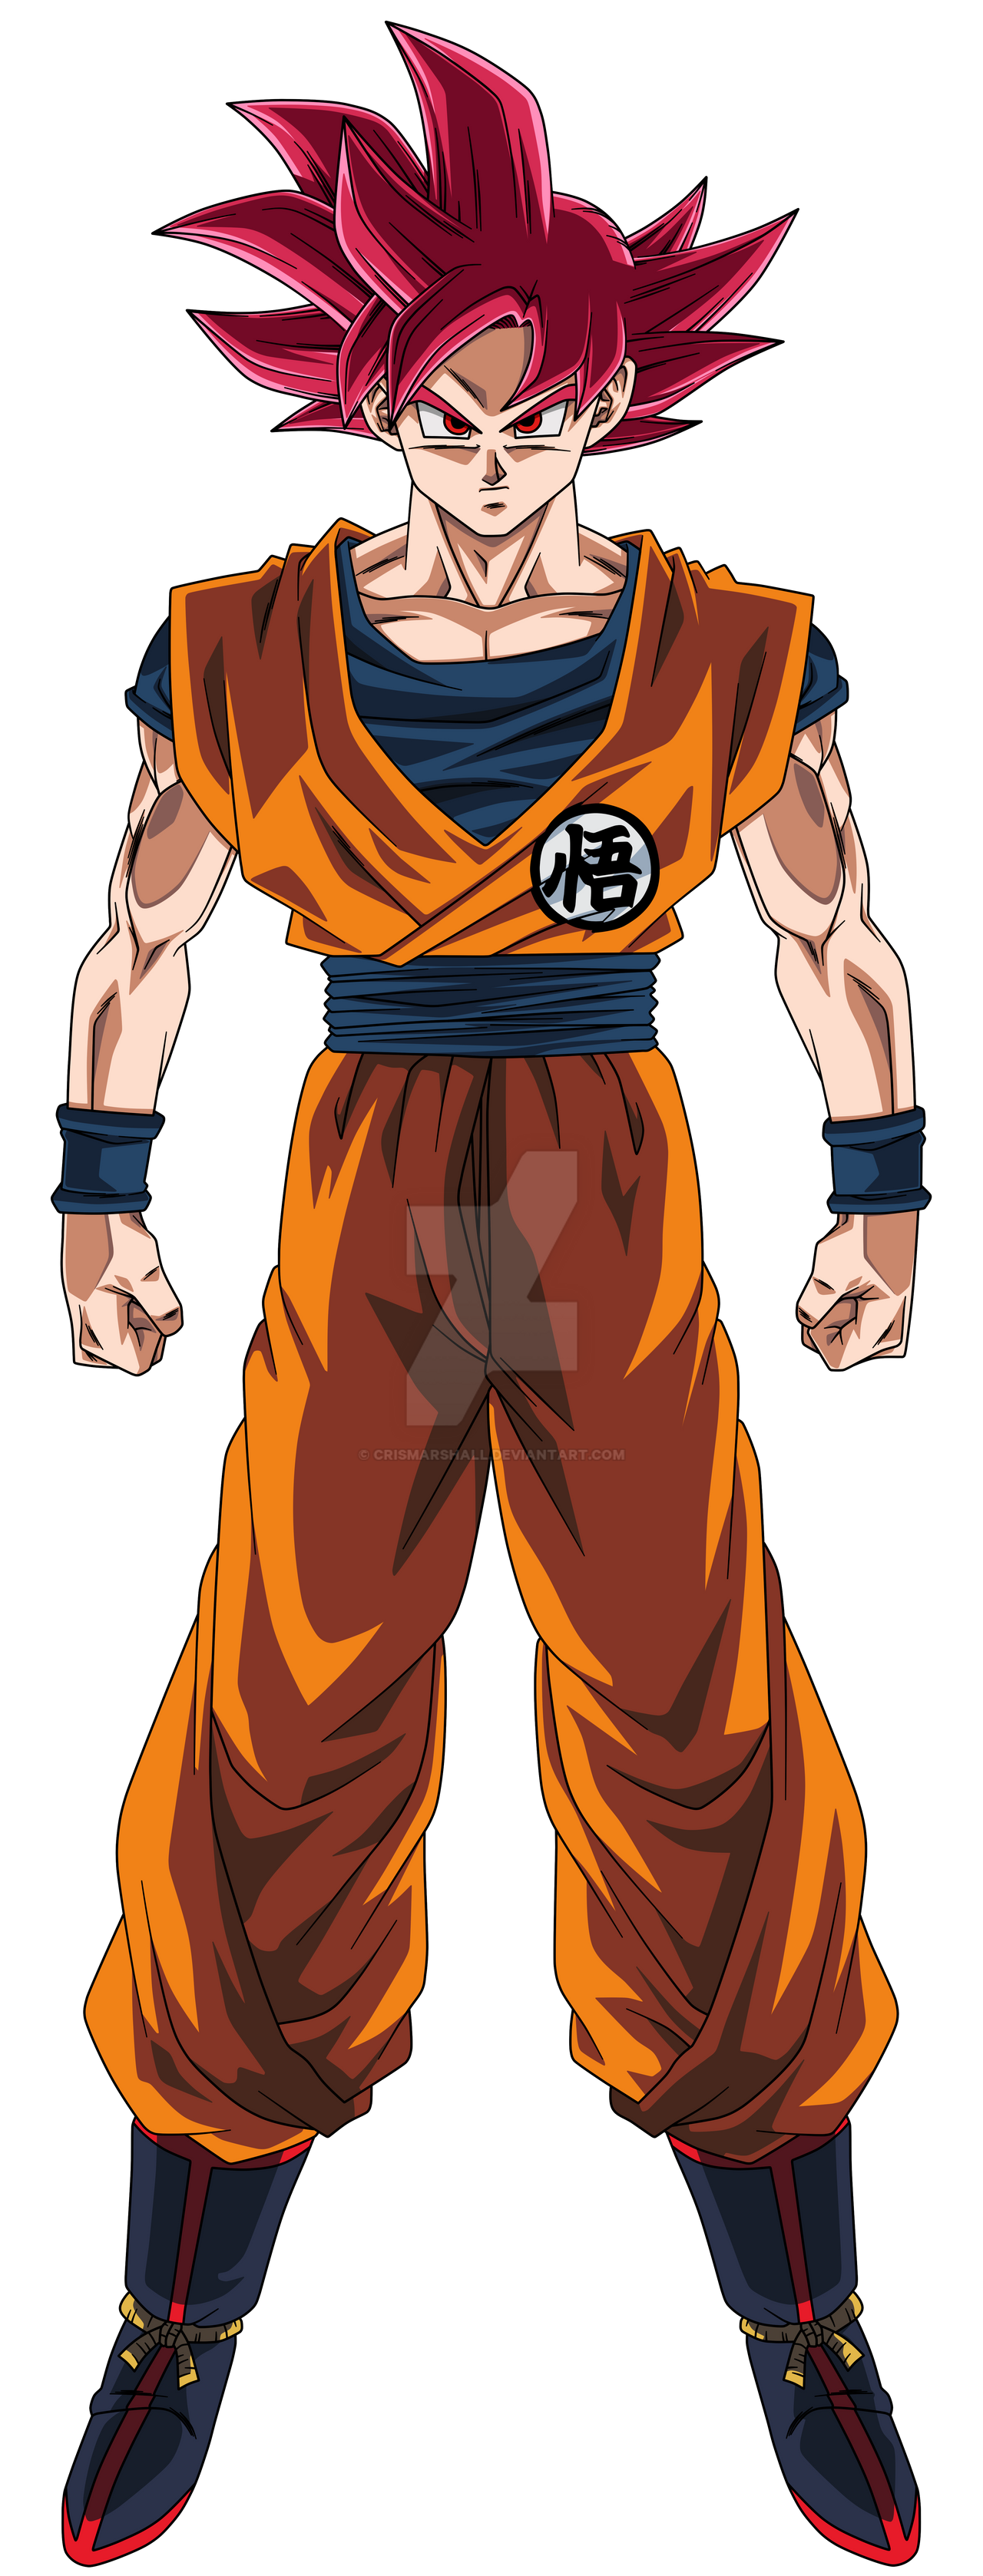 Goku Super Saiyajin 3 by arbiter720 on DeviantArt  Anime dragon ball super,  Dragon ball art goku, Dragon ball super manga